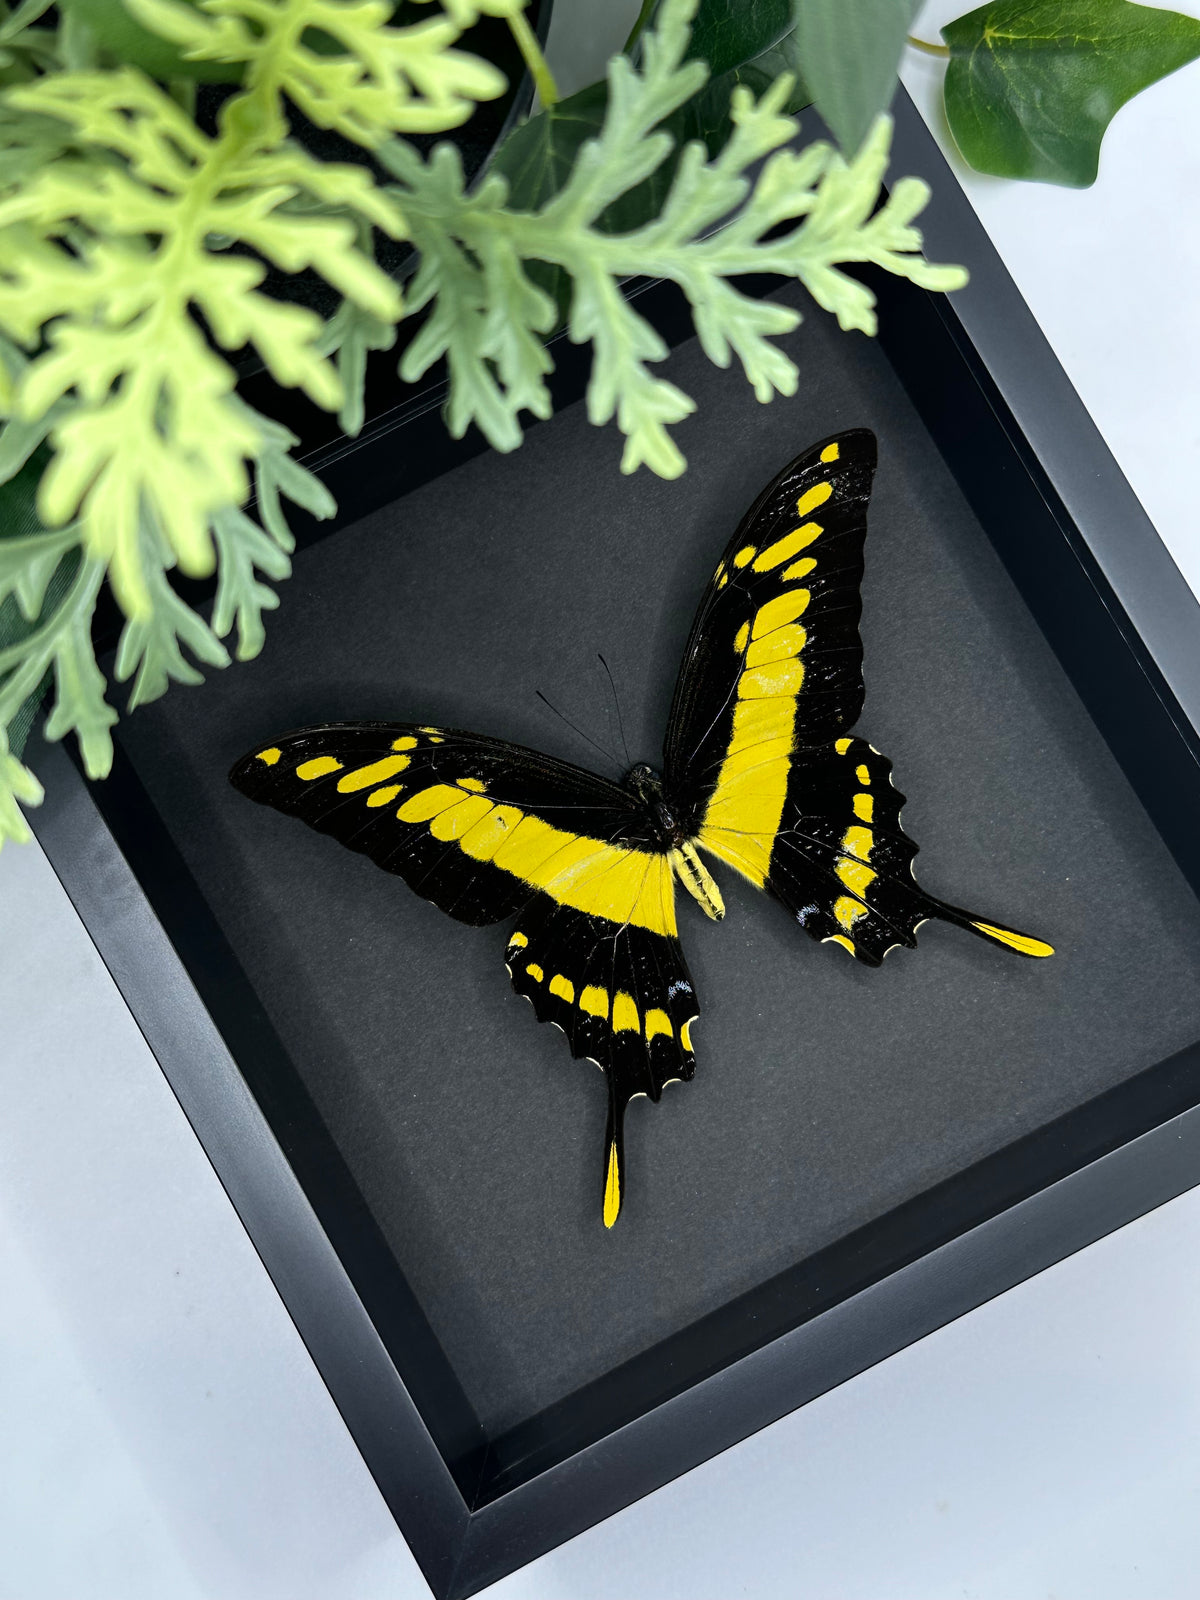 King Swallowtail / Papilio Thoas in a square frame